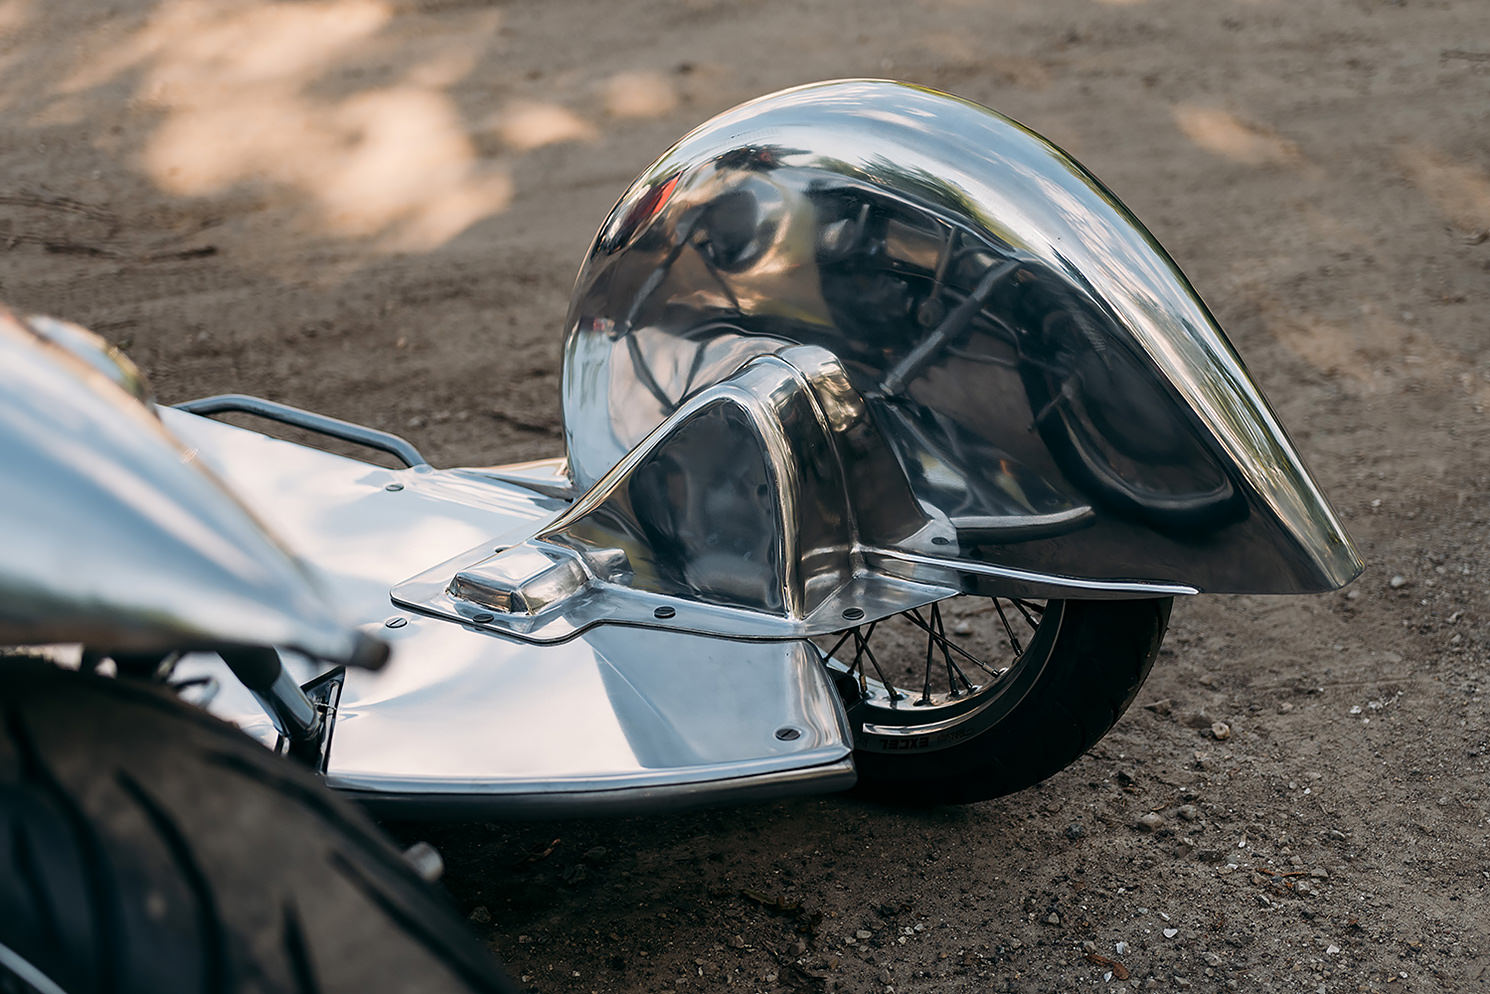 Custom Moto Guzzi sidecar by Rodsmith